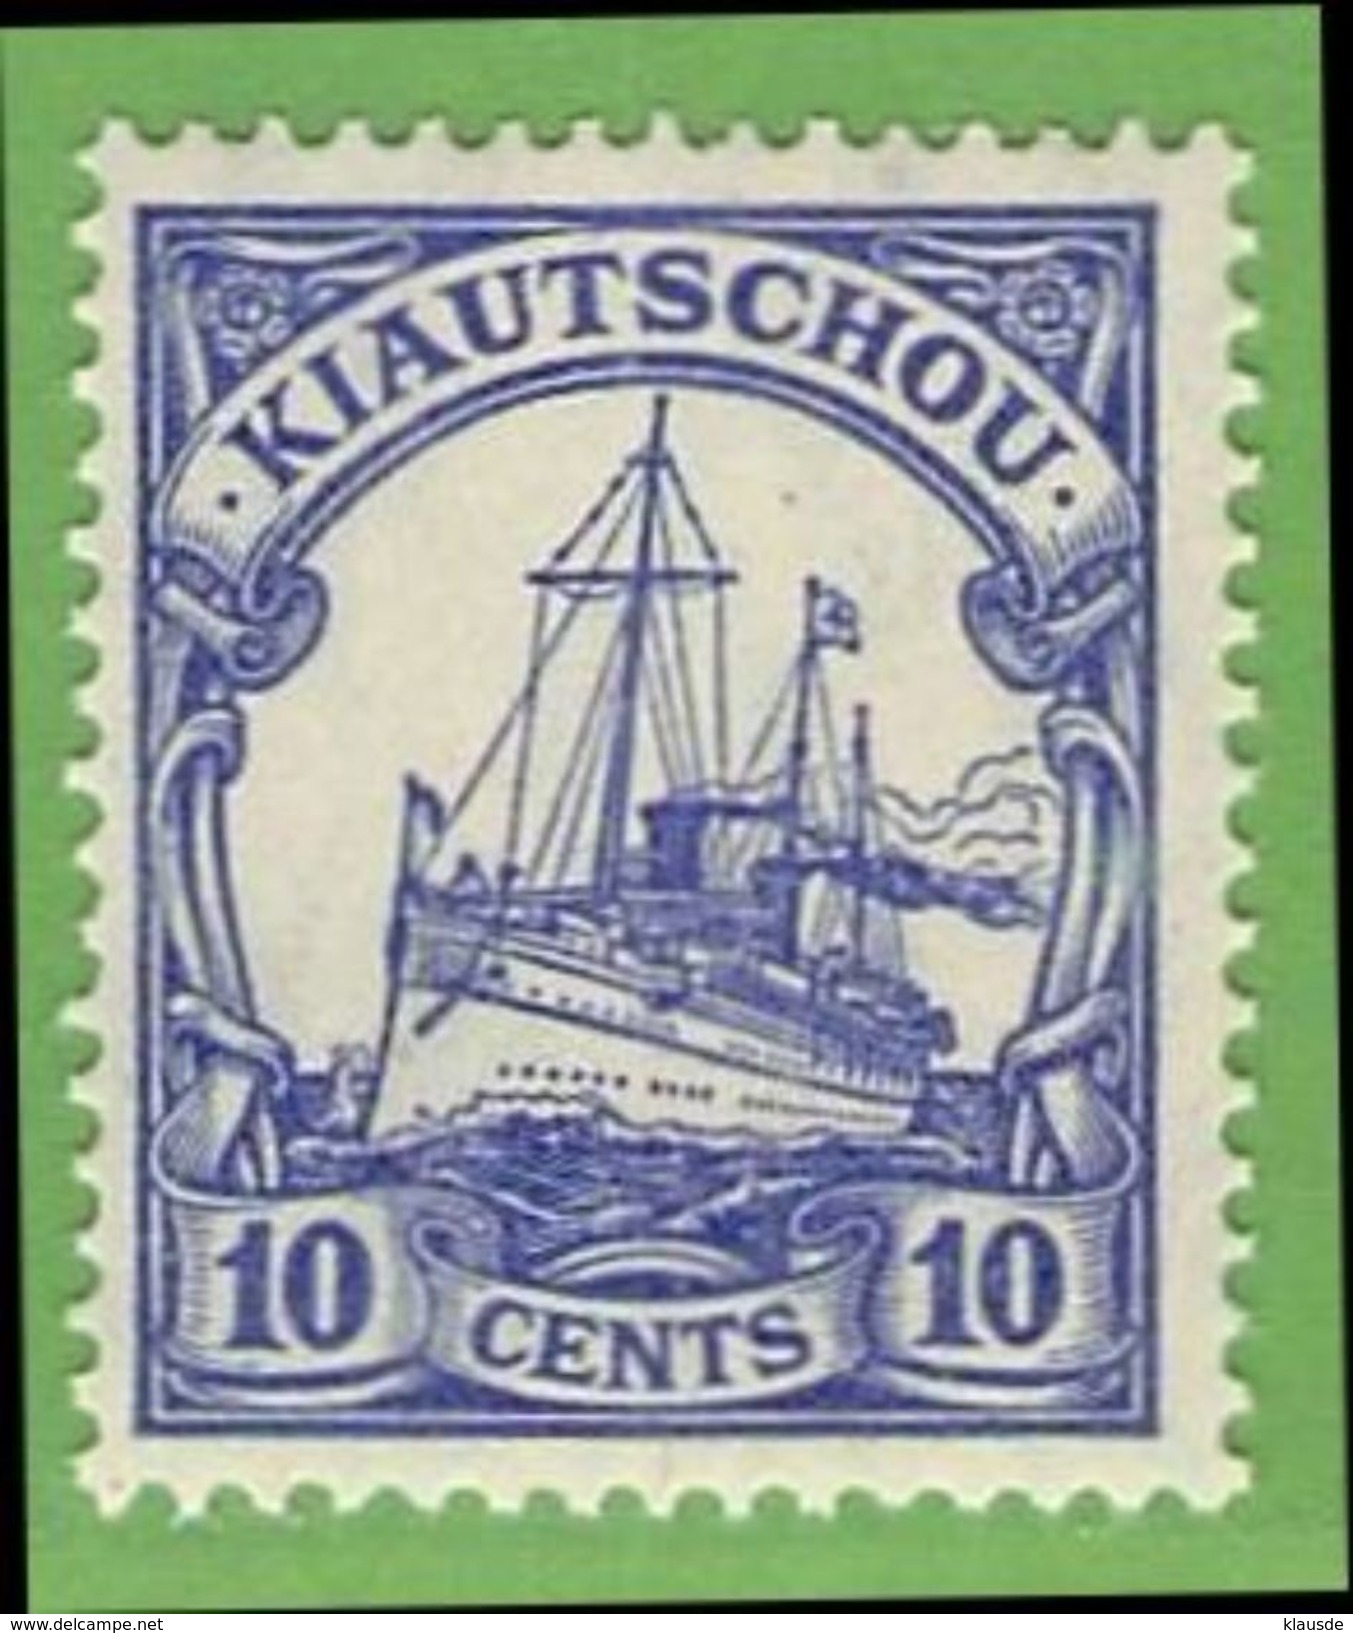 MiNr.31 Xx  Deutschland Deutsche Kolonie Kiautschou - Kiautchou